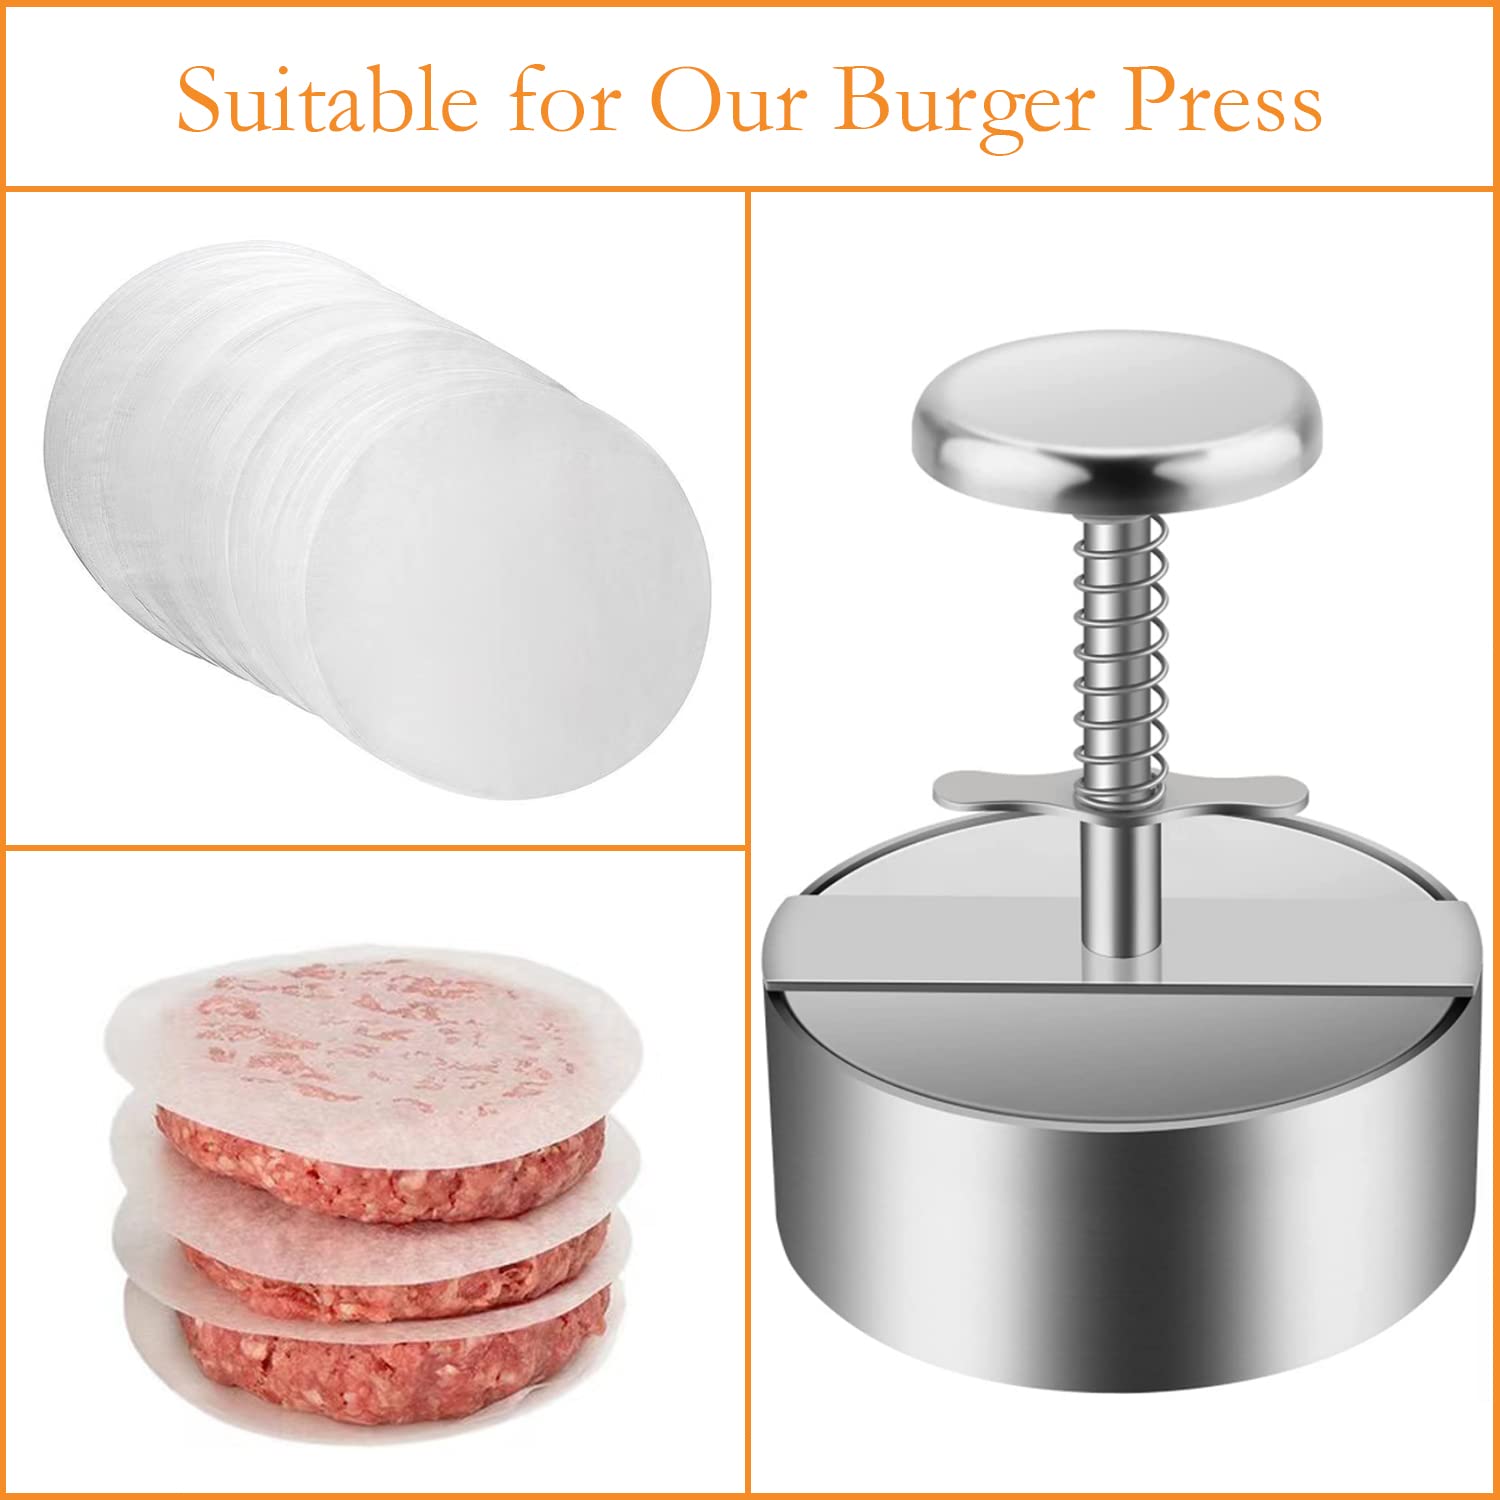 🔥 BIG SALE - 50% OFF🔥Manual meat press for hamburger patties